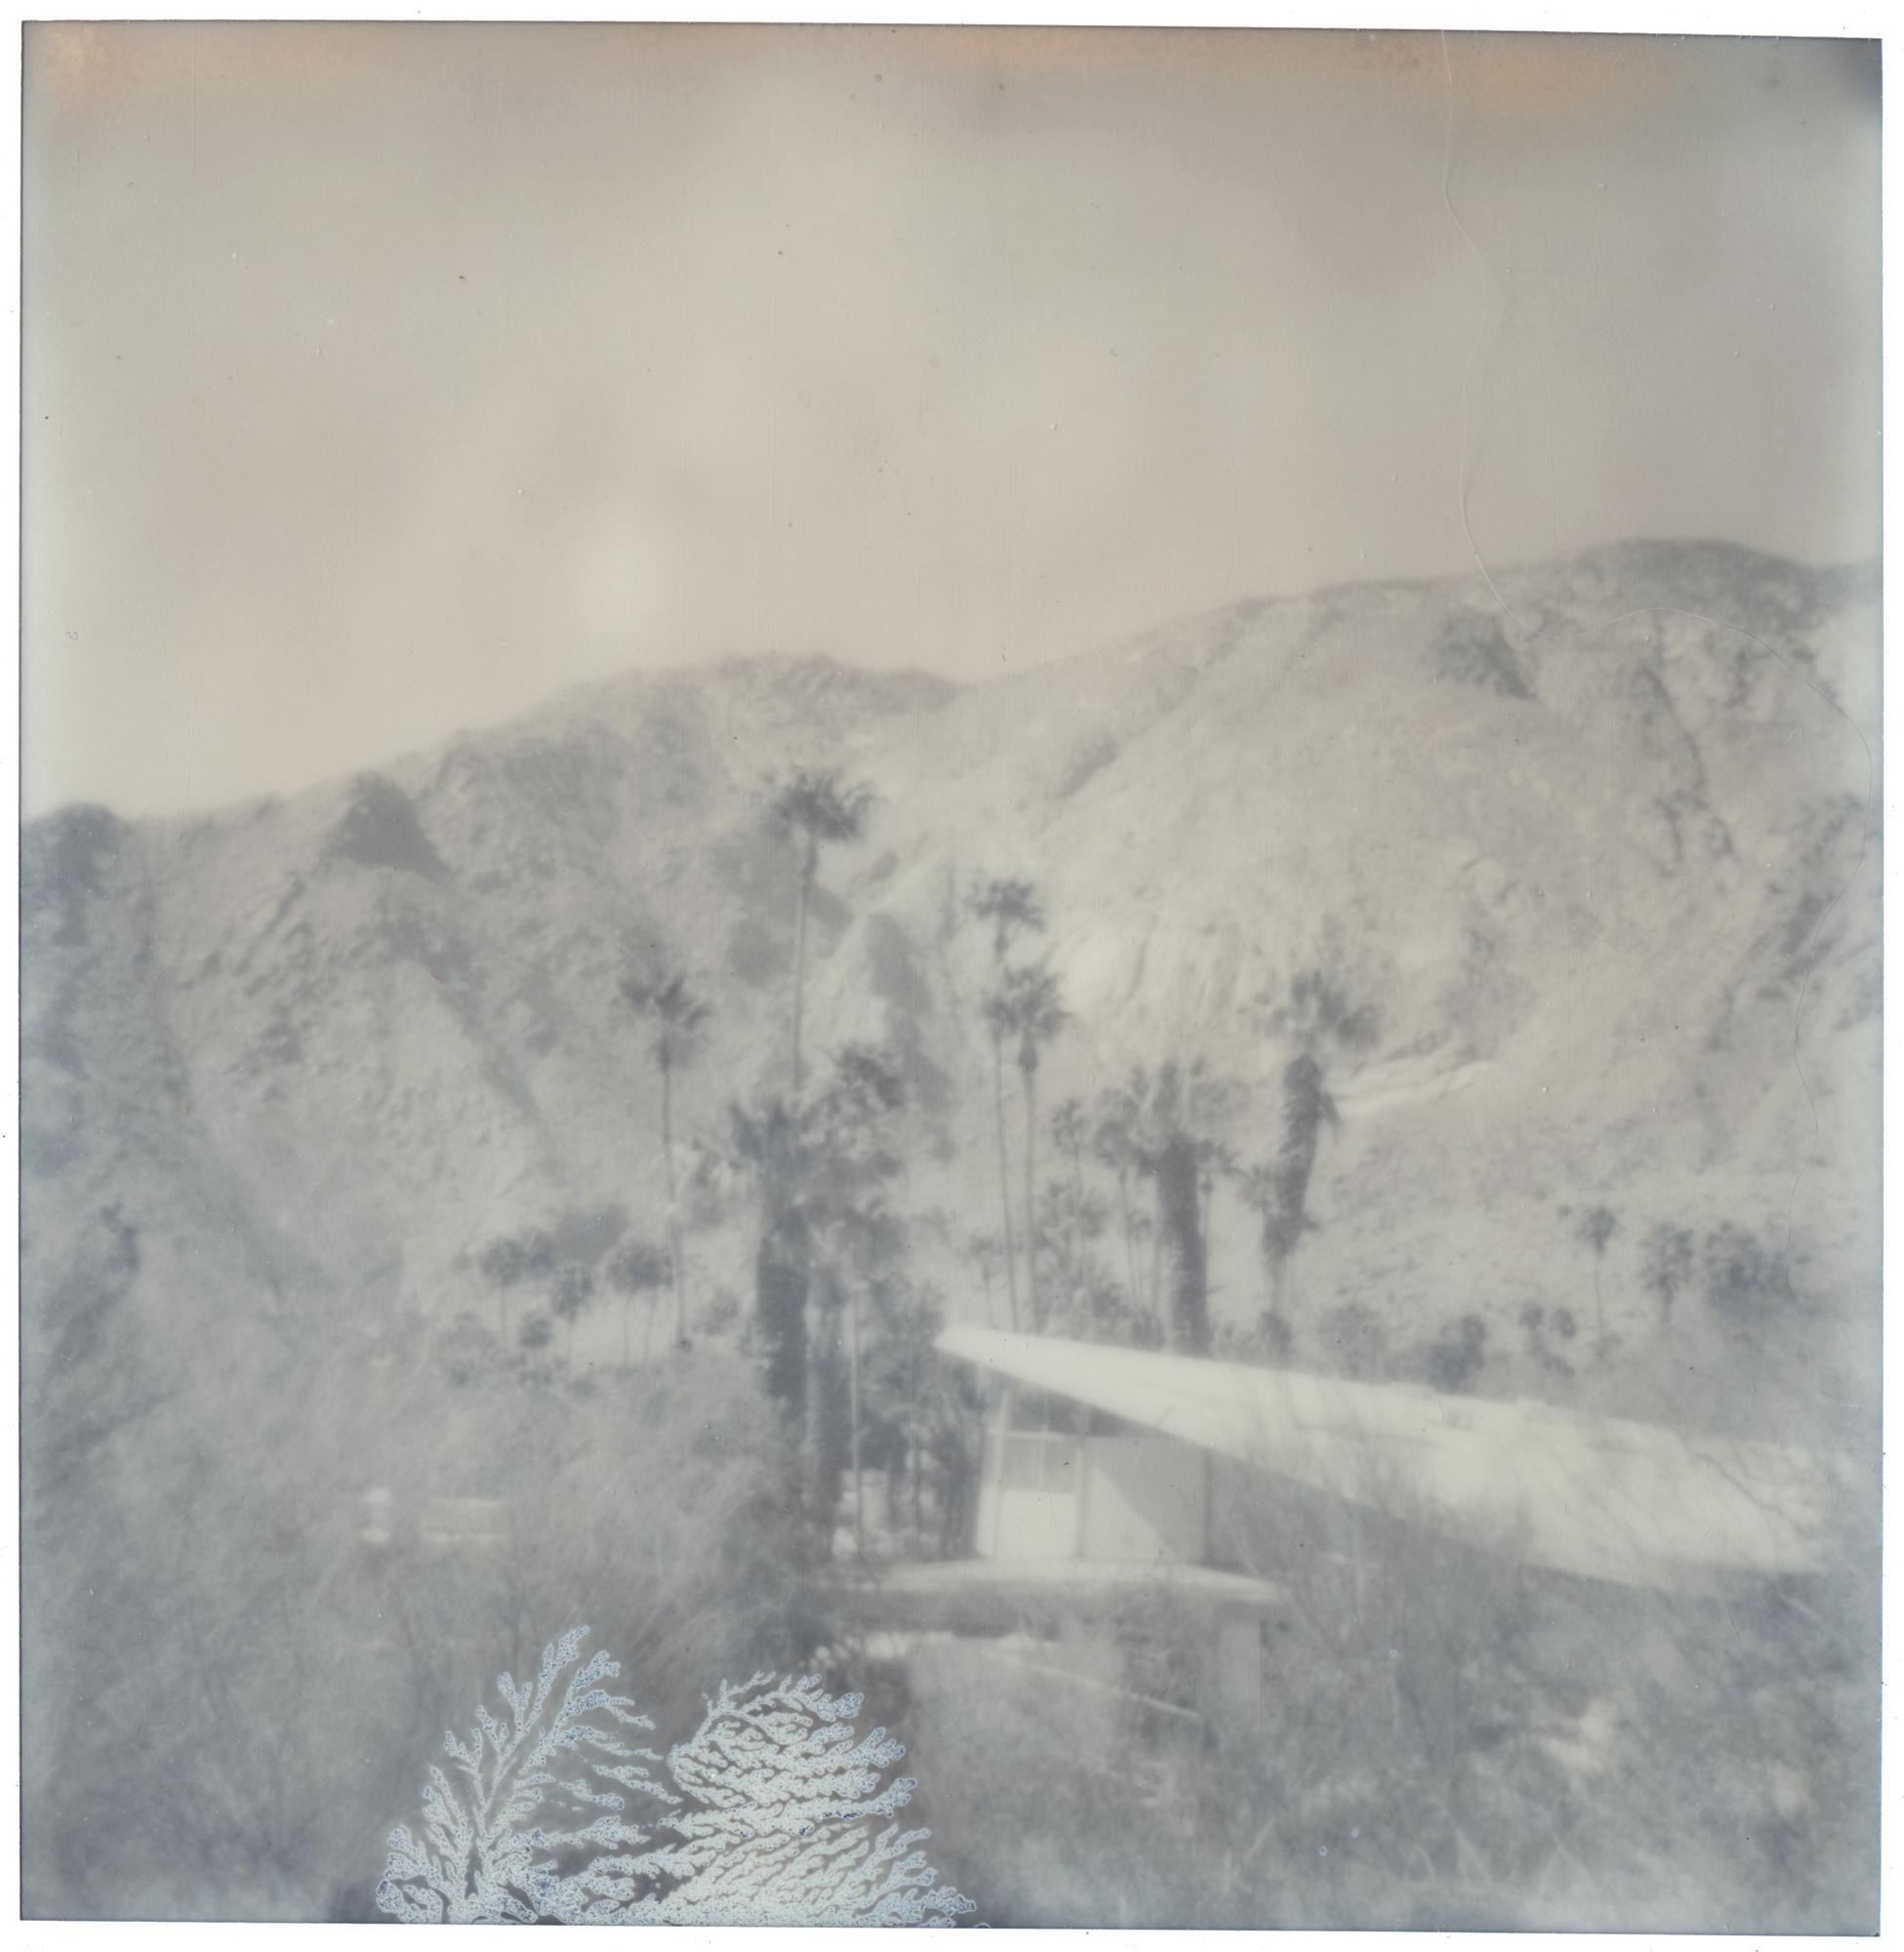 Landscape Photograph Stefanie Schneider - House of Tomorrow (Californication) - Polaroïd